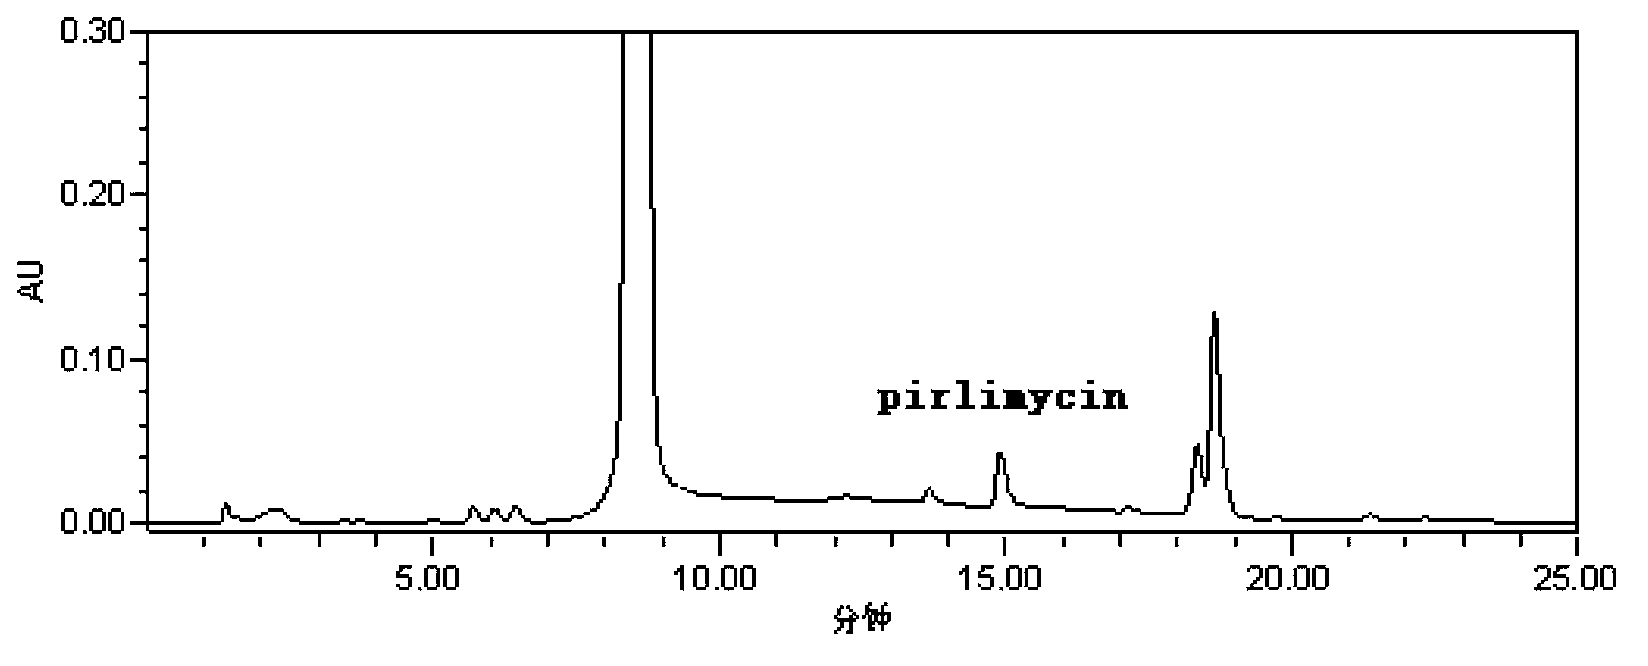 Pirlimycin residue analysis method